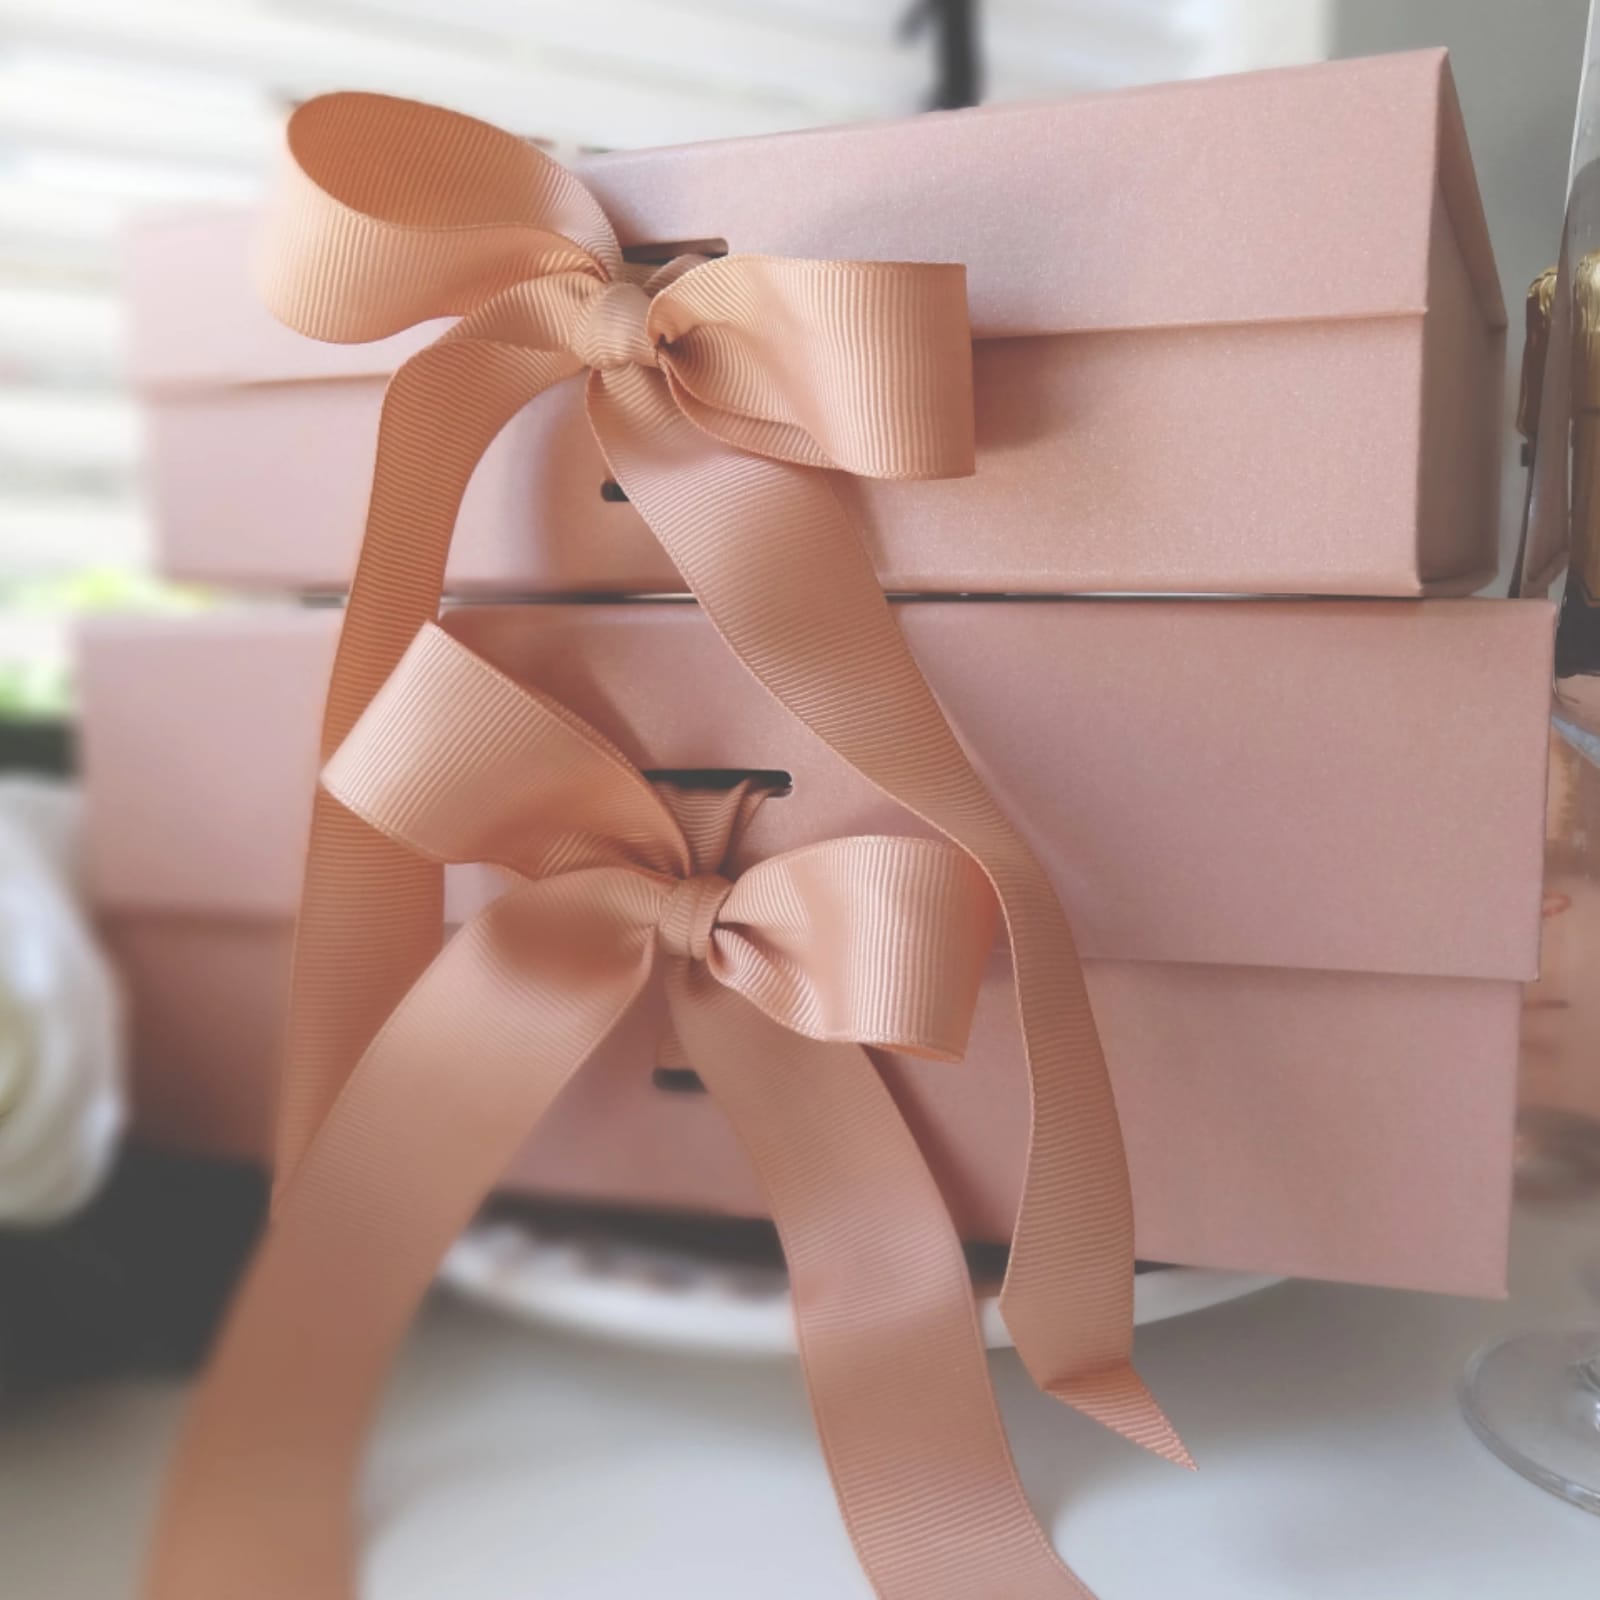 Best Friend Wedding Day Gift Box Ribbon Tie, Script Lettering to My Best  Friend on Her Wedding Day, Memory Gift Box Keepsake Present Love - Etsy